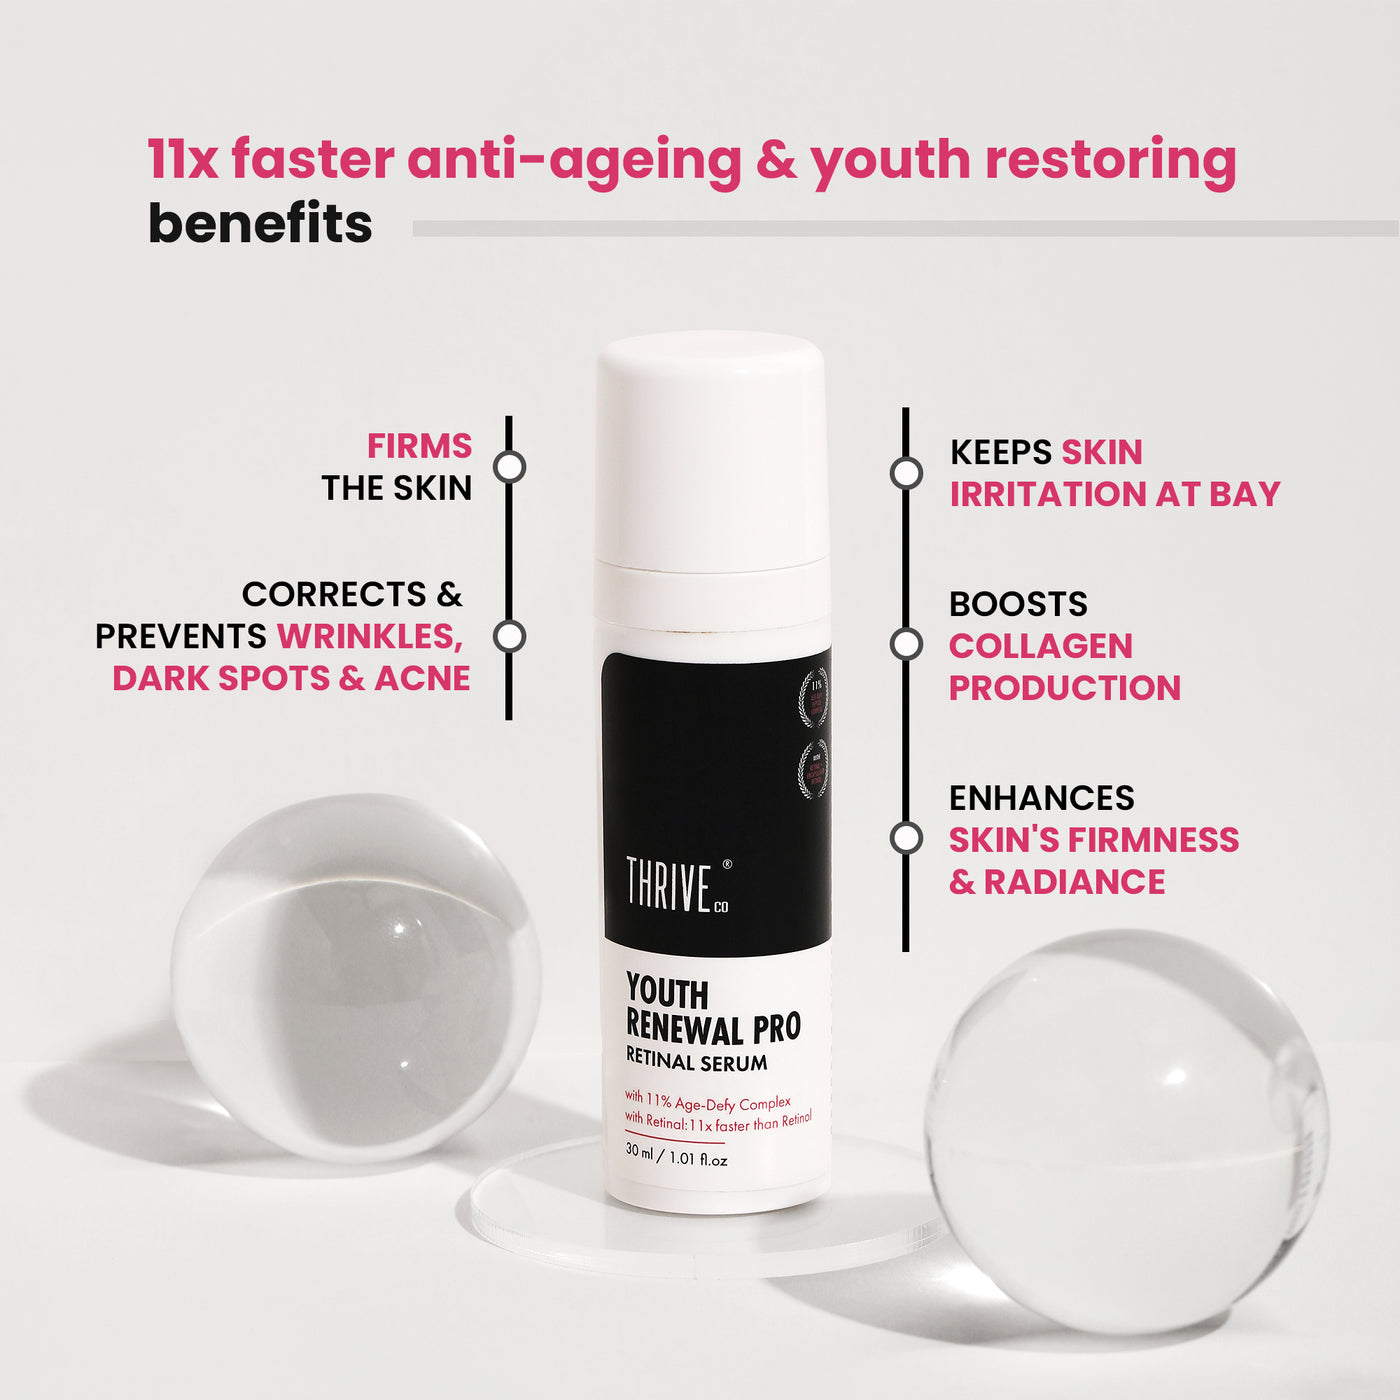 ThriveCo Youth Renewal Serum Pro For Anti-Ageing | Reduce Fine lines, Acne, Wrinkles | Retinal serum: 11X Faster Than Your Retinol Serum | For Seasoned Retinol Users | Men & Women  | 30ml